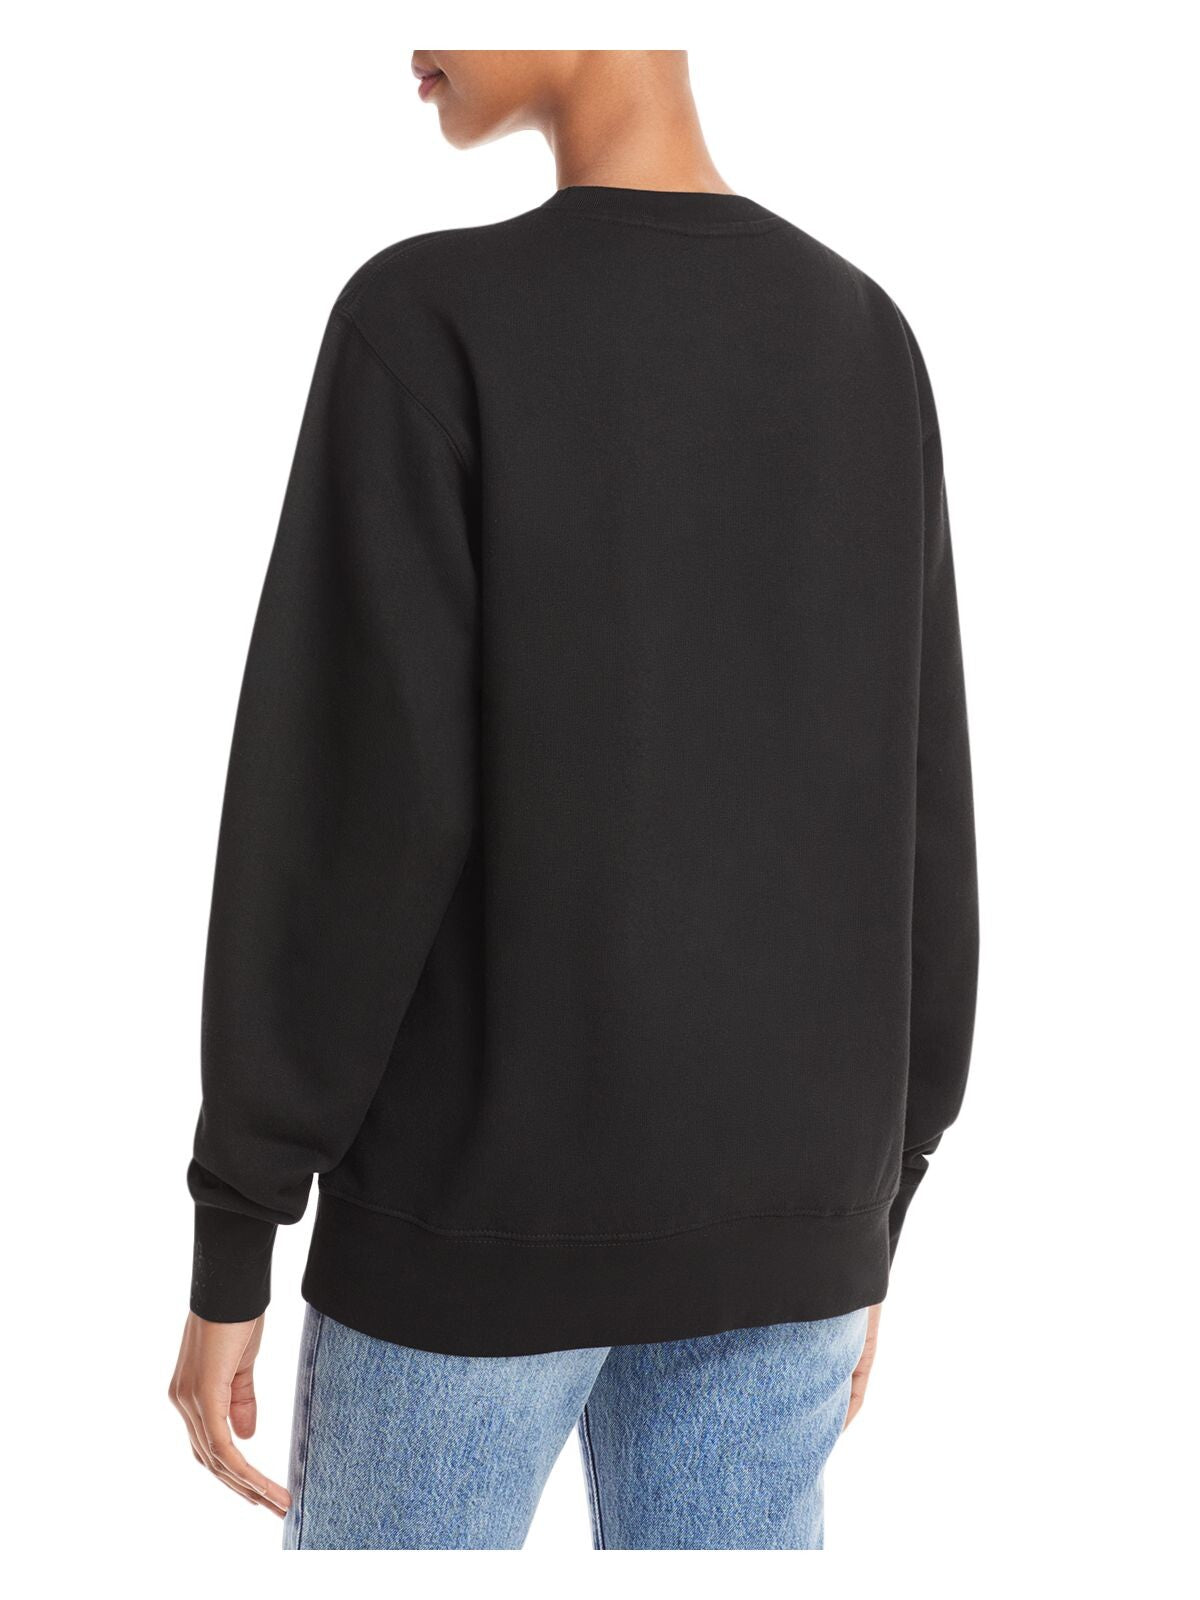 HYBRID APPAREL Womens Black Stretch Graphic Long Sleeve Crew Neck Sweatshirt Plus 2XL